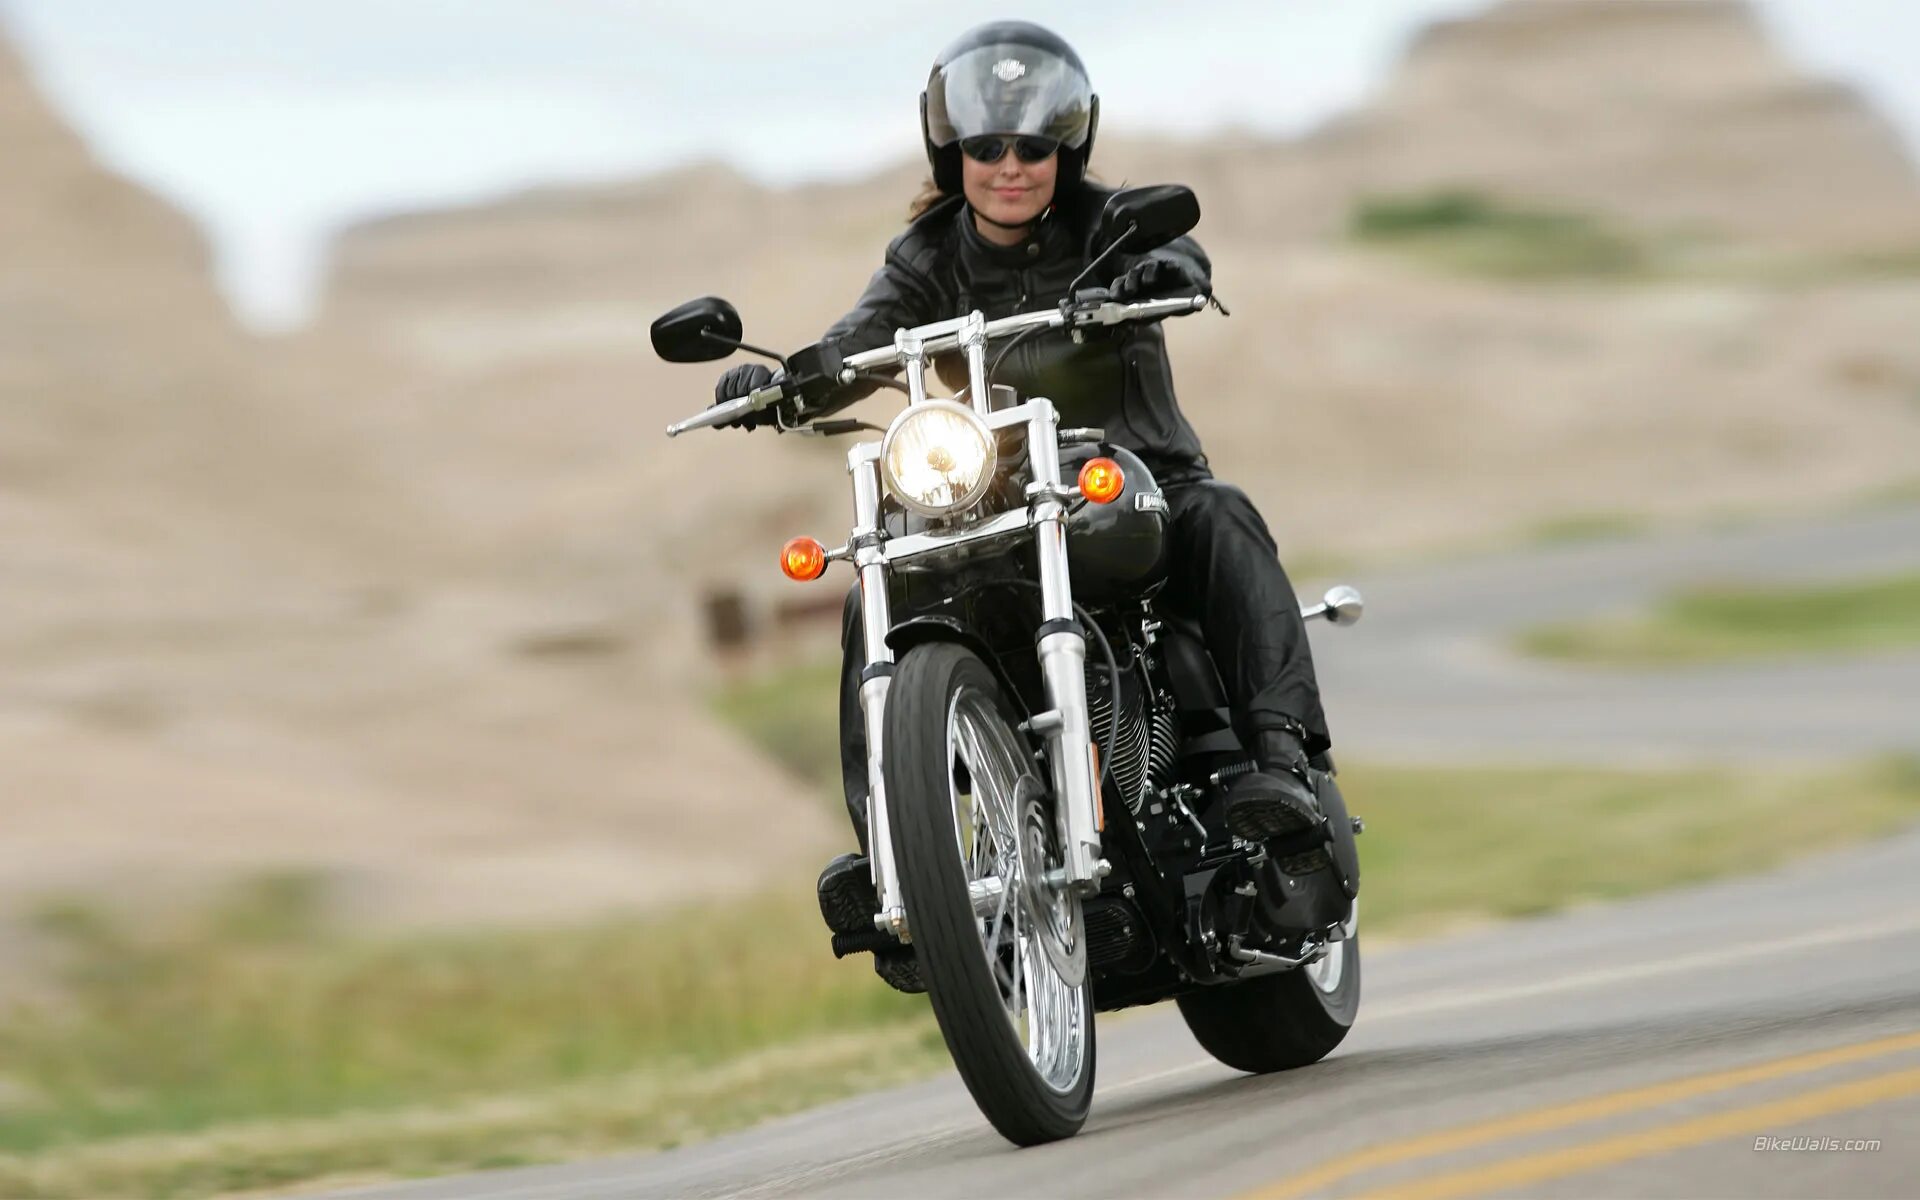 Harley Davidson 2006 Softail Heritage. Женский Харлей Дэвидсон мотоцикл. Харлей Дэвидсон чоппер езда. Девушка на мотоцикле. Как правильно ездить на мотоцикле